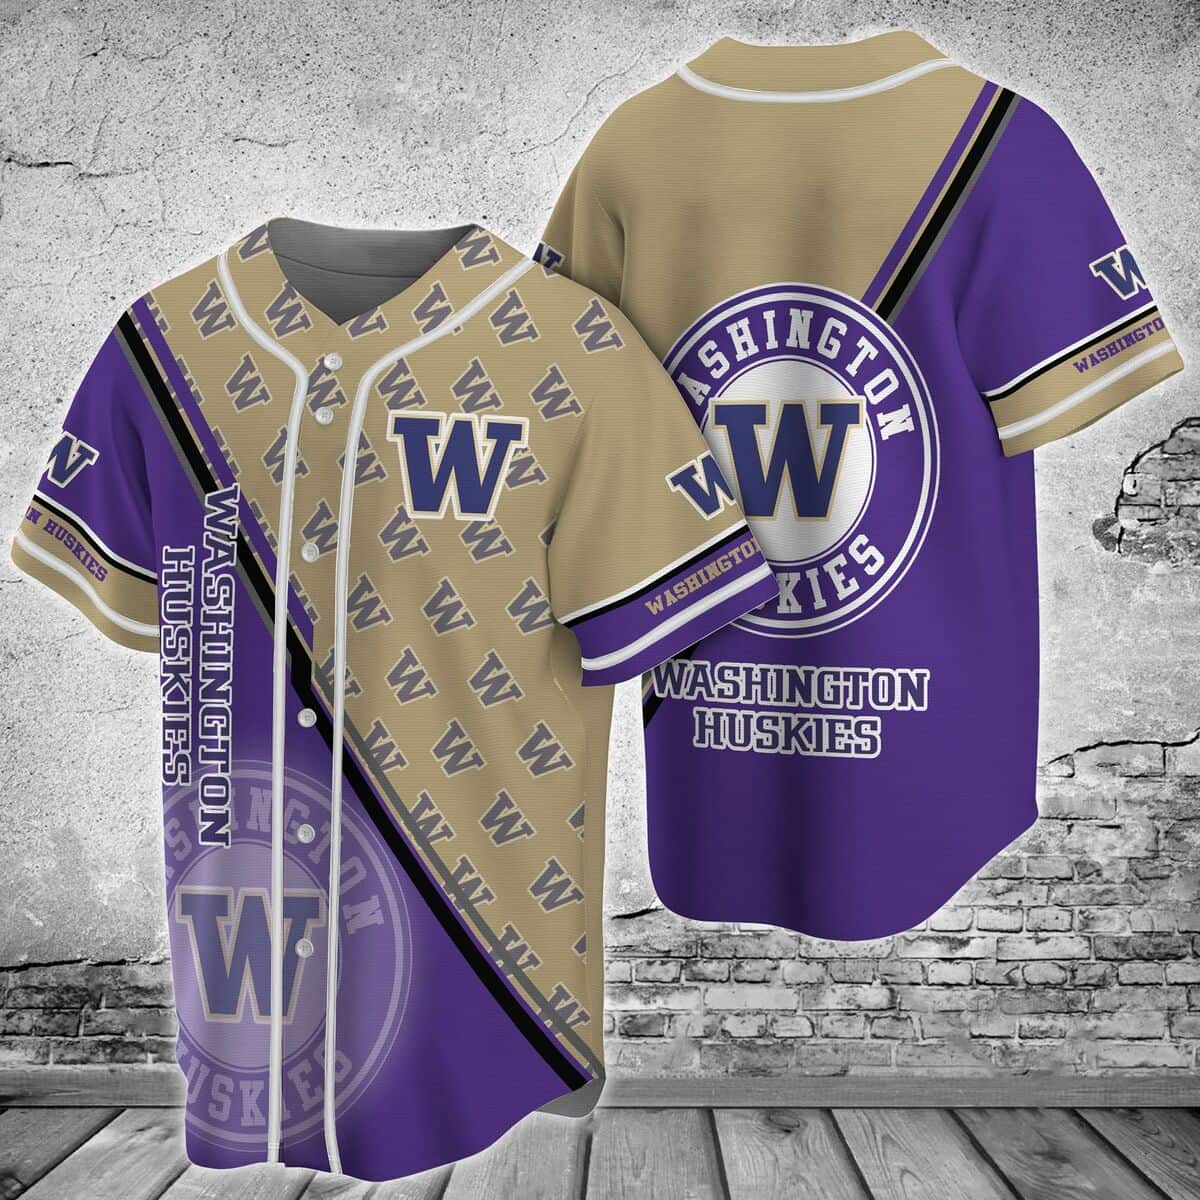 Awesome Washington Huskies Baseball Jersey Gift For NCAA Fans